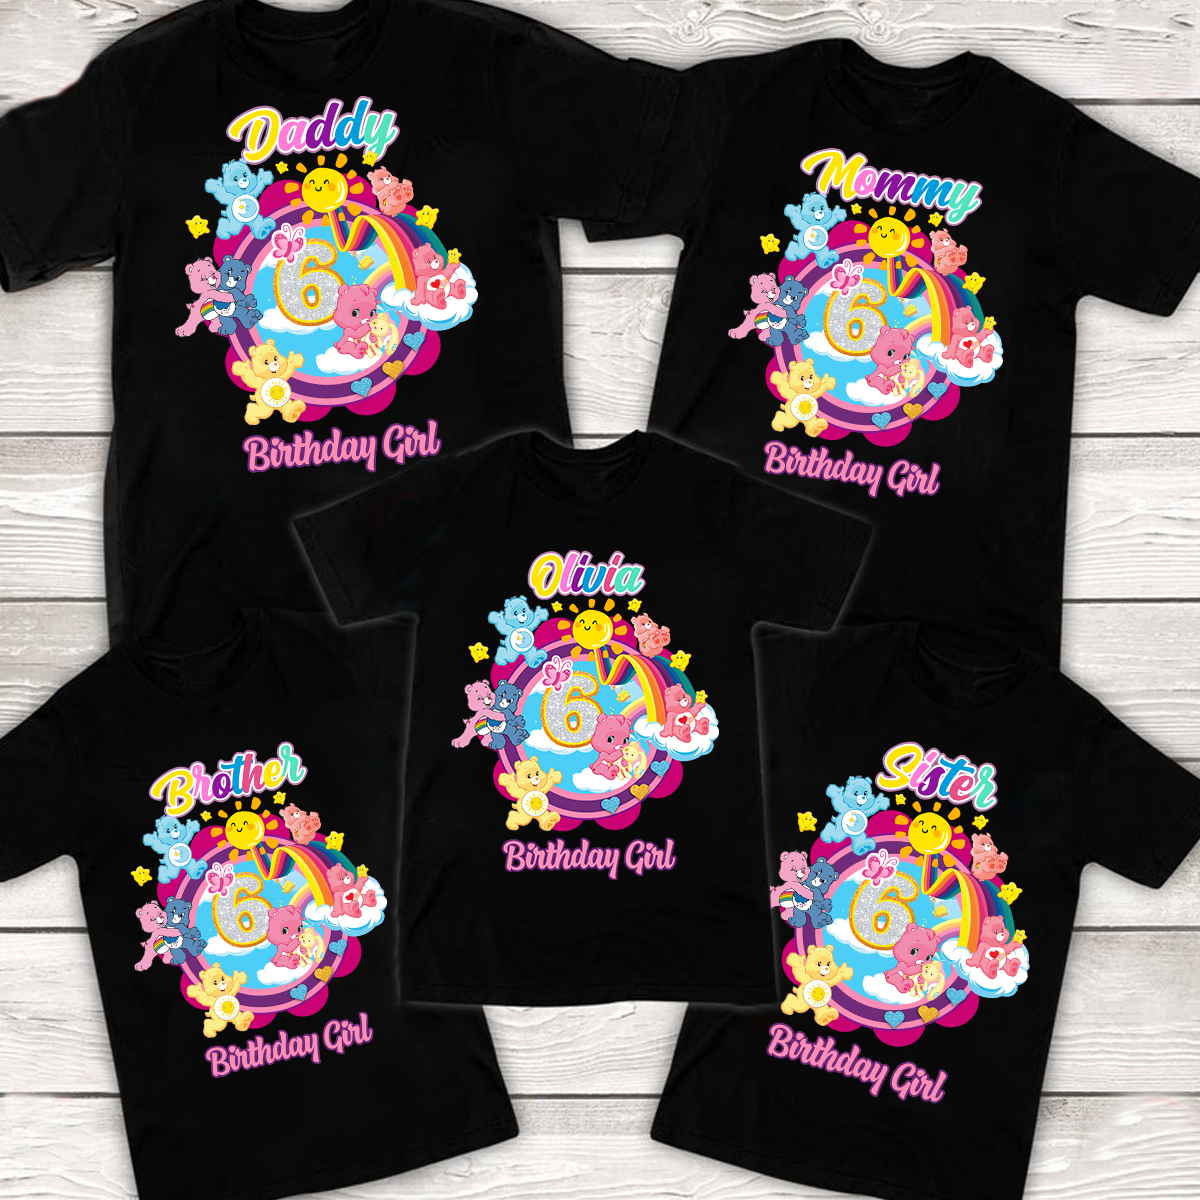 Personalized Care Bears Birthday Shirt, Custom Matching Family Shirt, Personalized Birthday Gifts